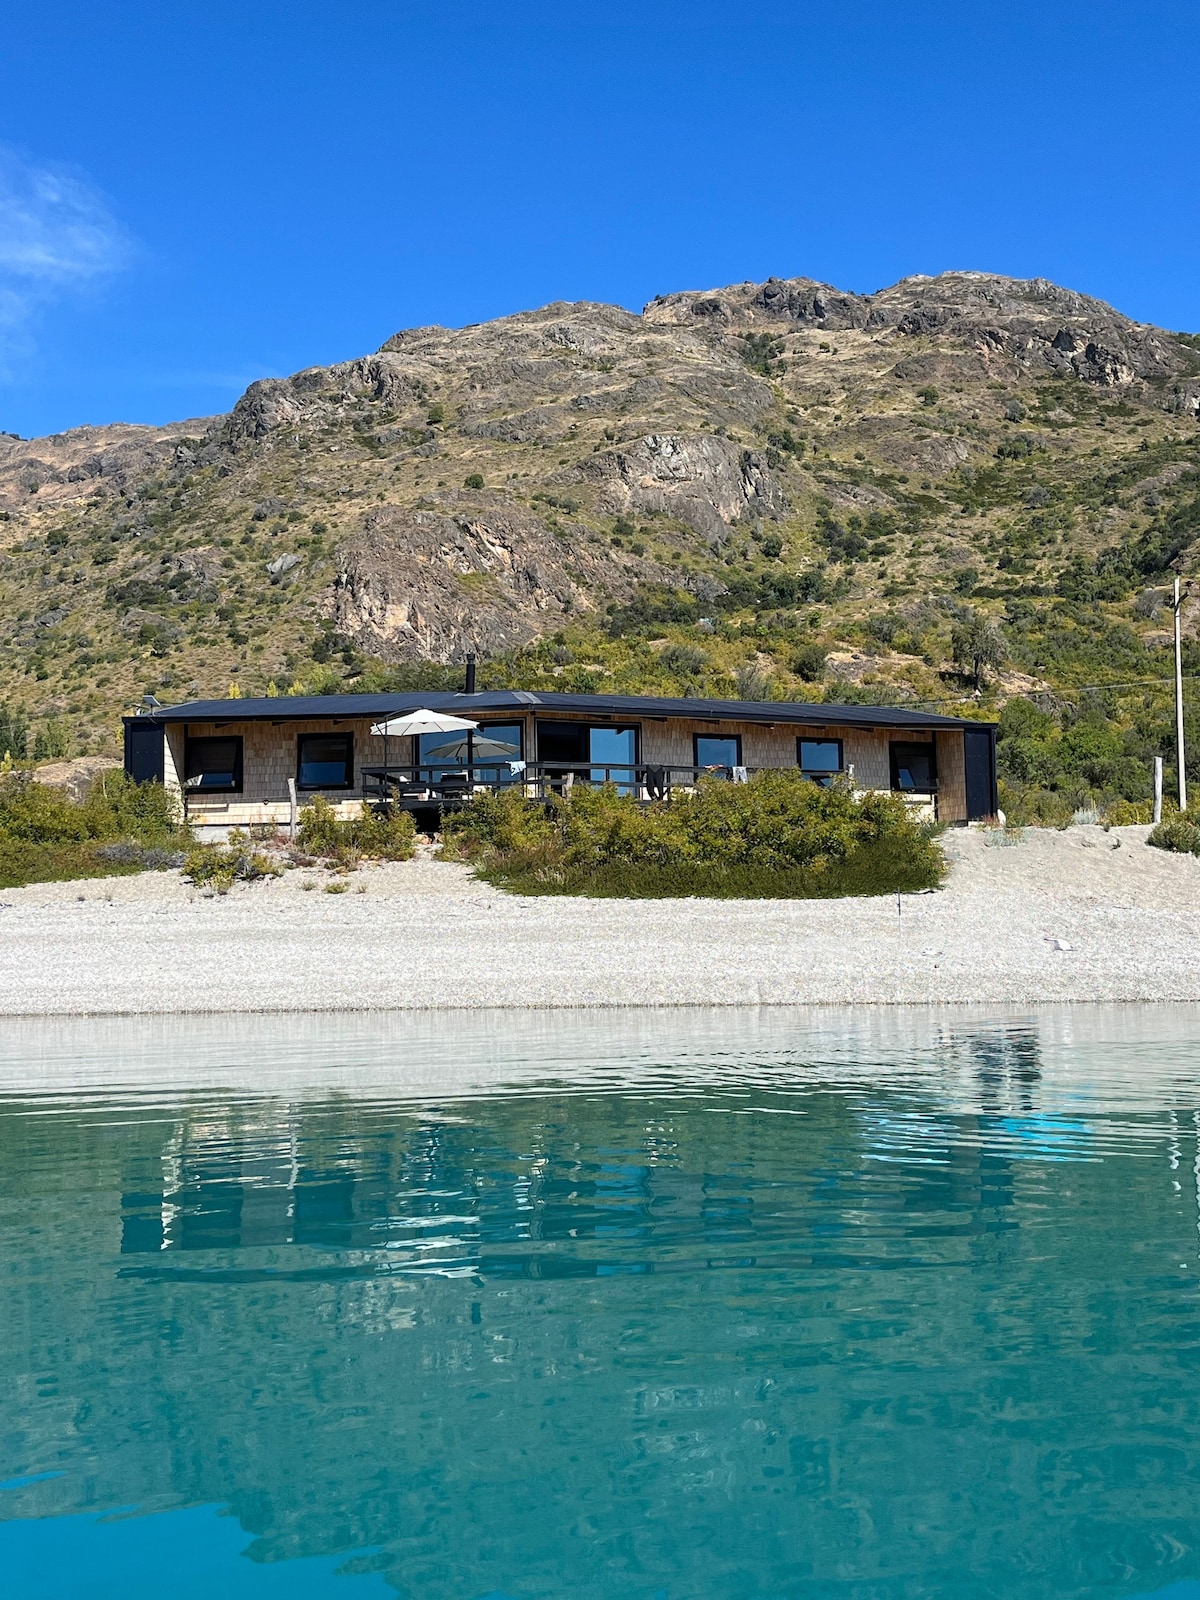 Patagon Refuge: Casa a Orillas del Lago